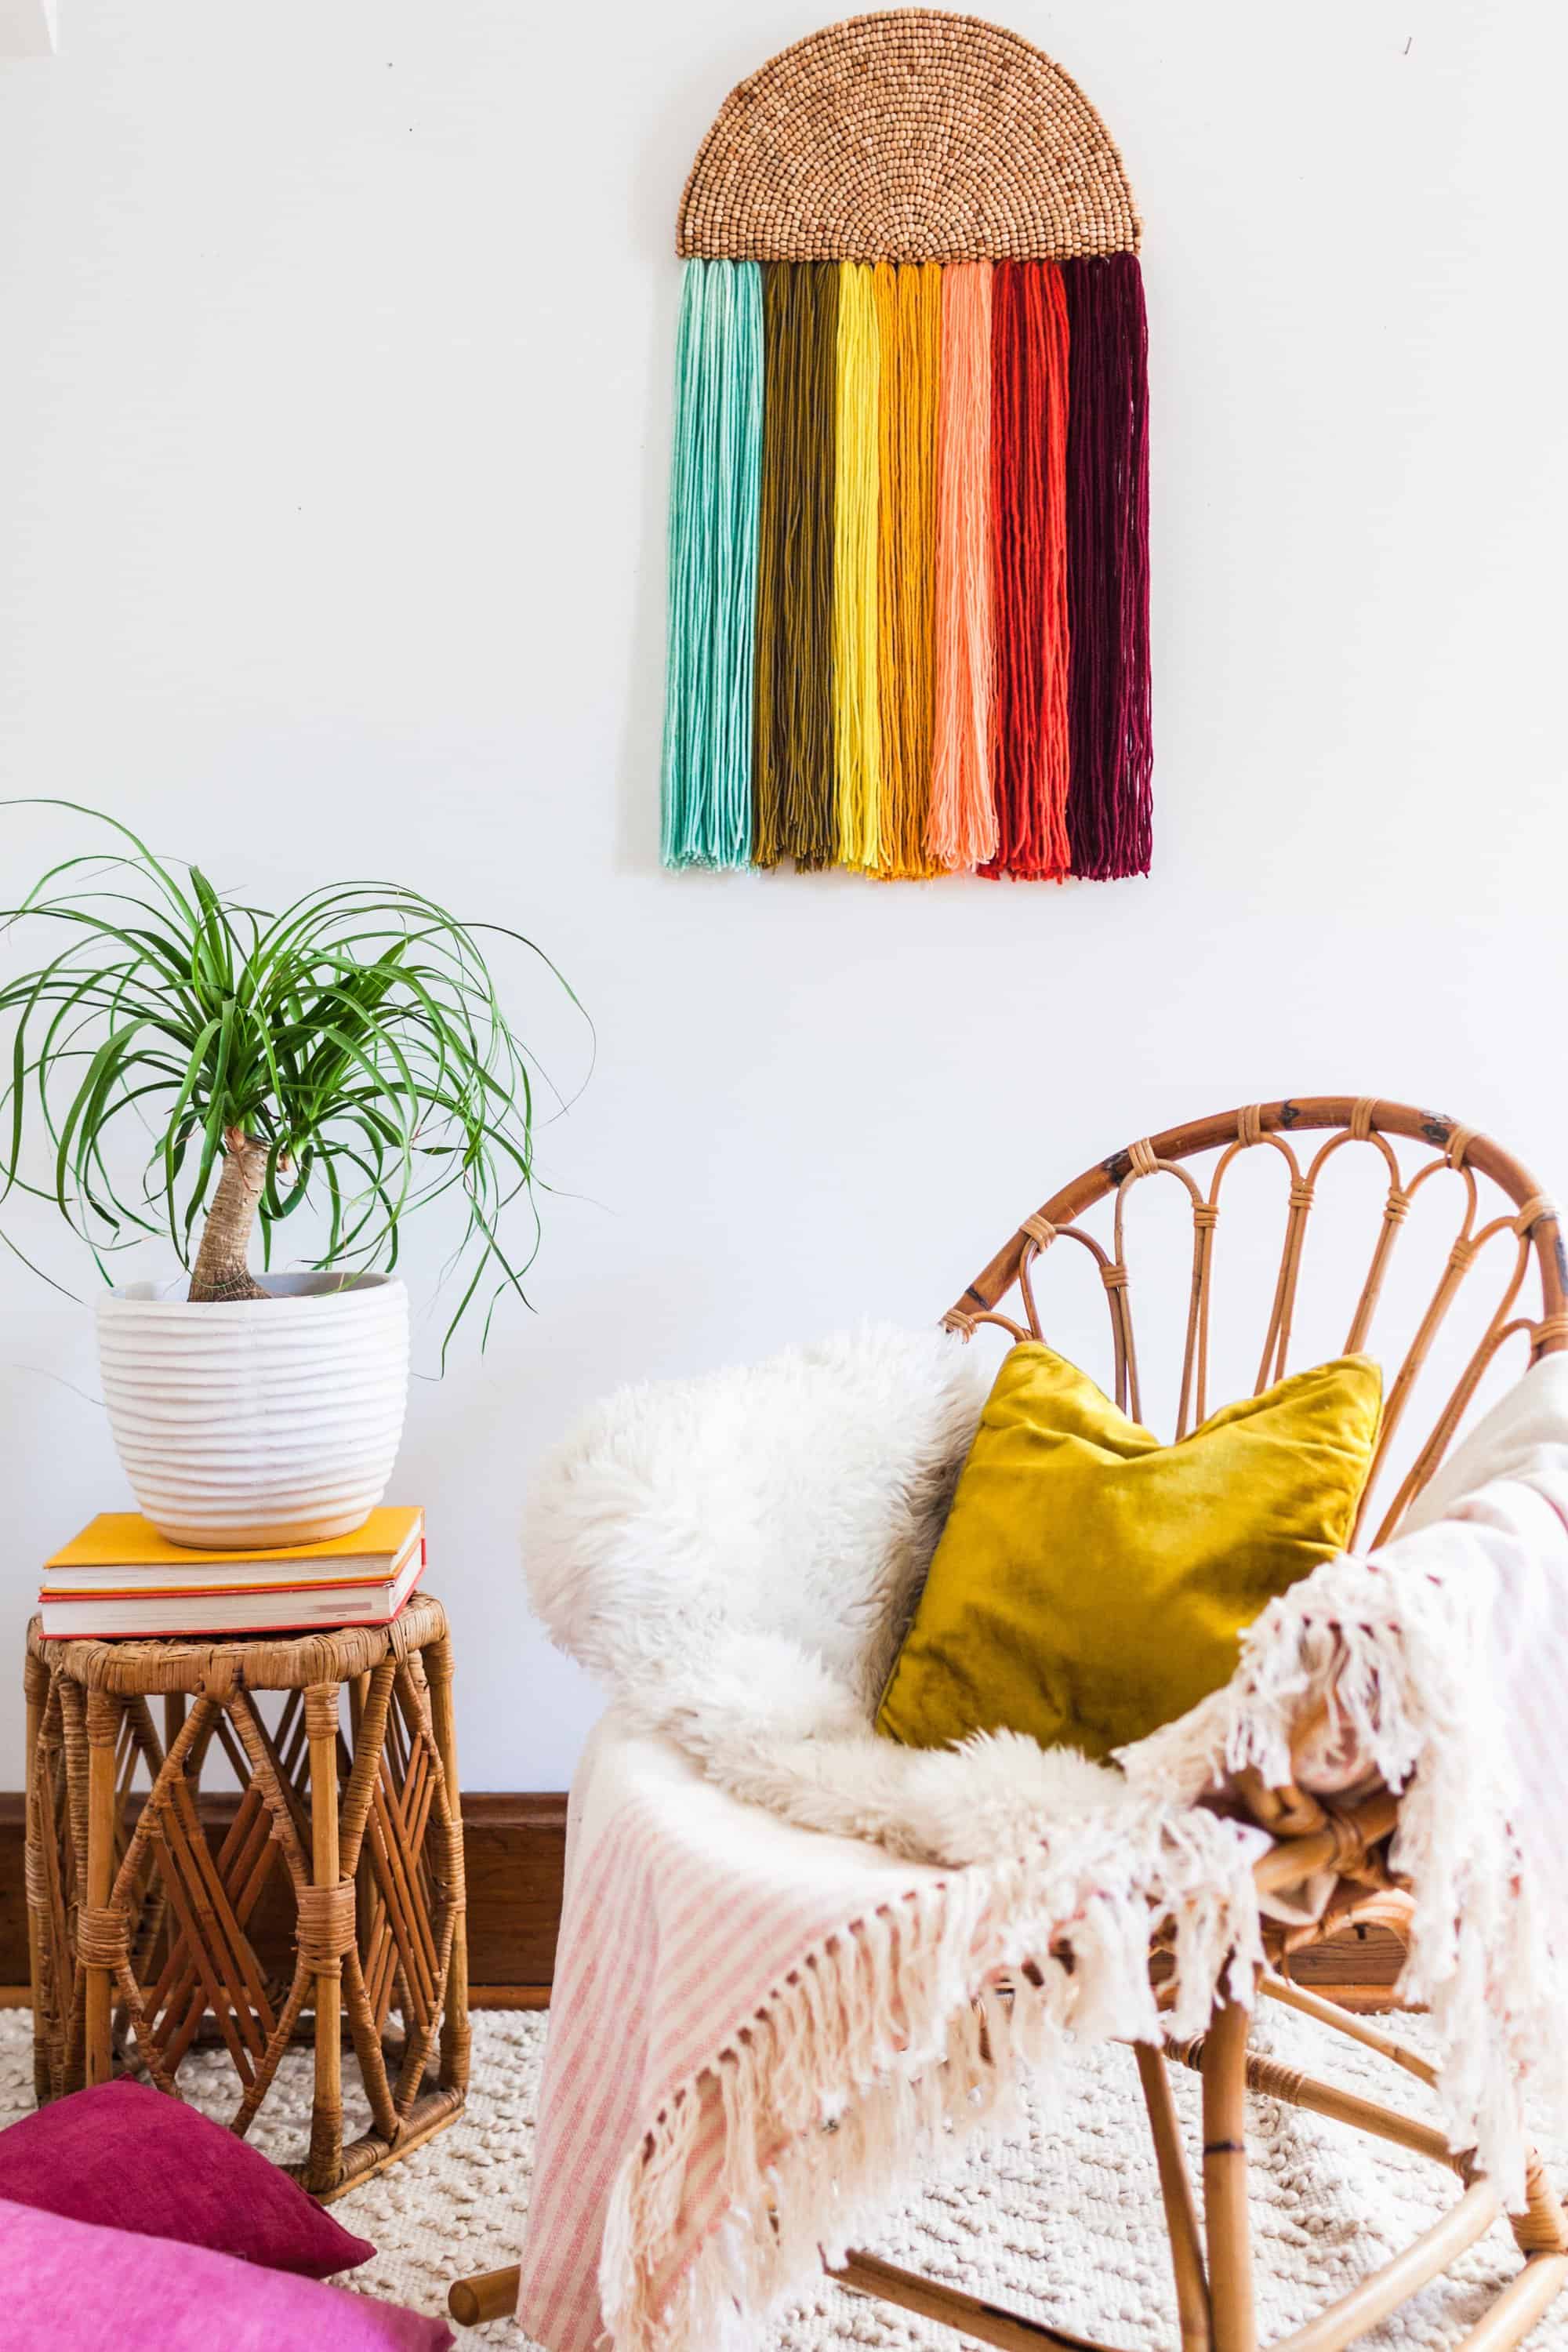 DIY Macrame with Yarn Wall Art - Home Decor